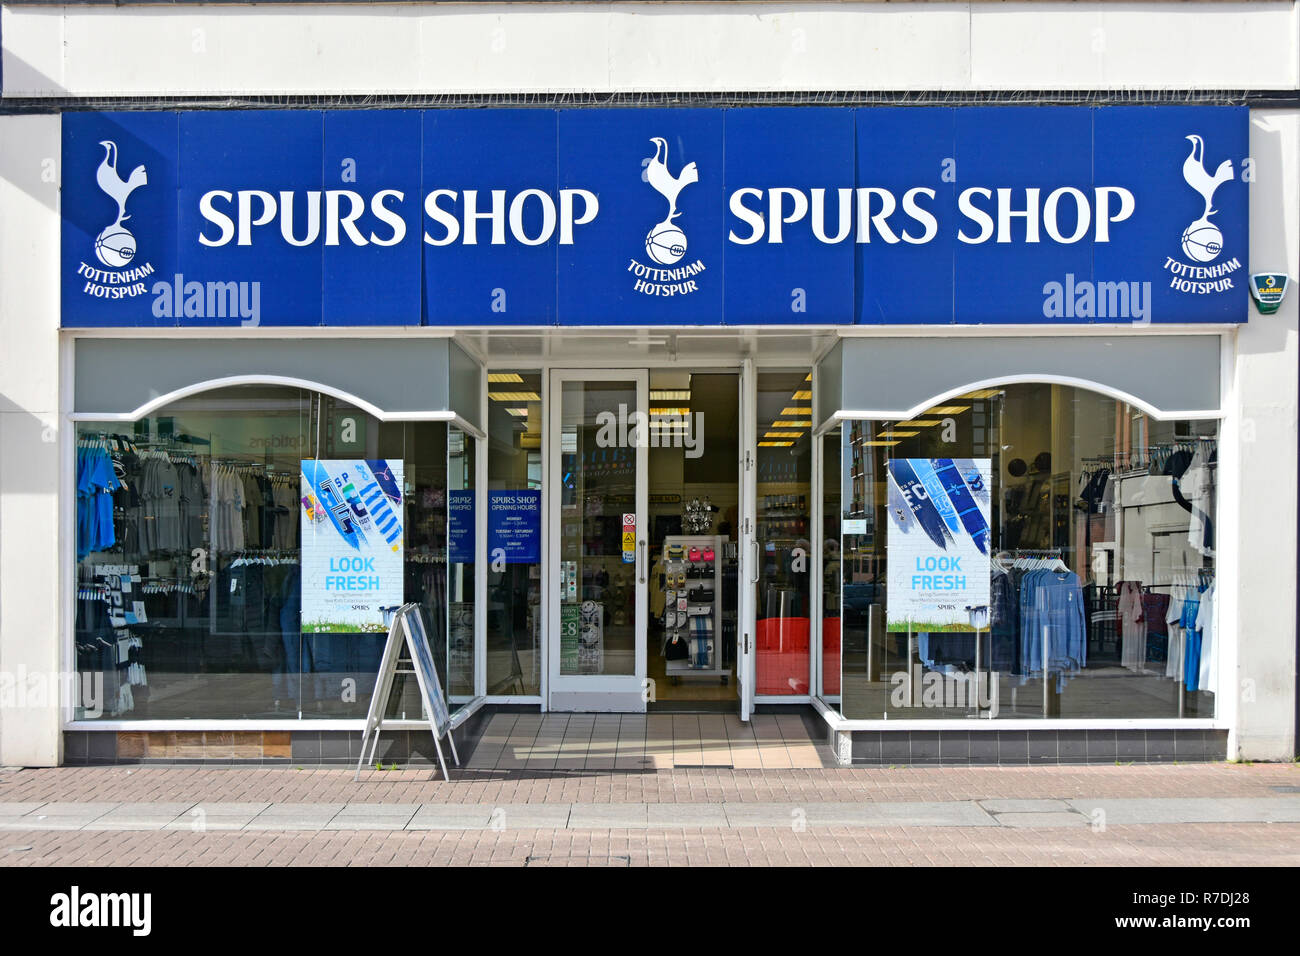 Tottenham Hotspur premier league football club retail sports shop front window for business selling Spurs football kit & fans memorabilia Southend UK Stock Photo